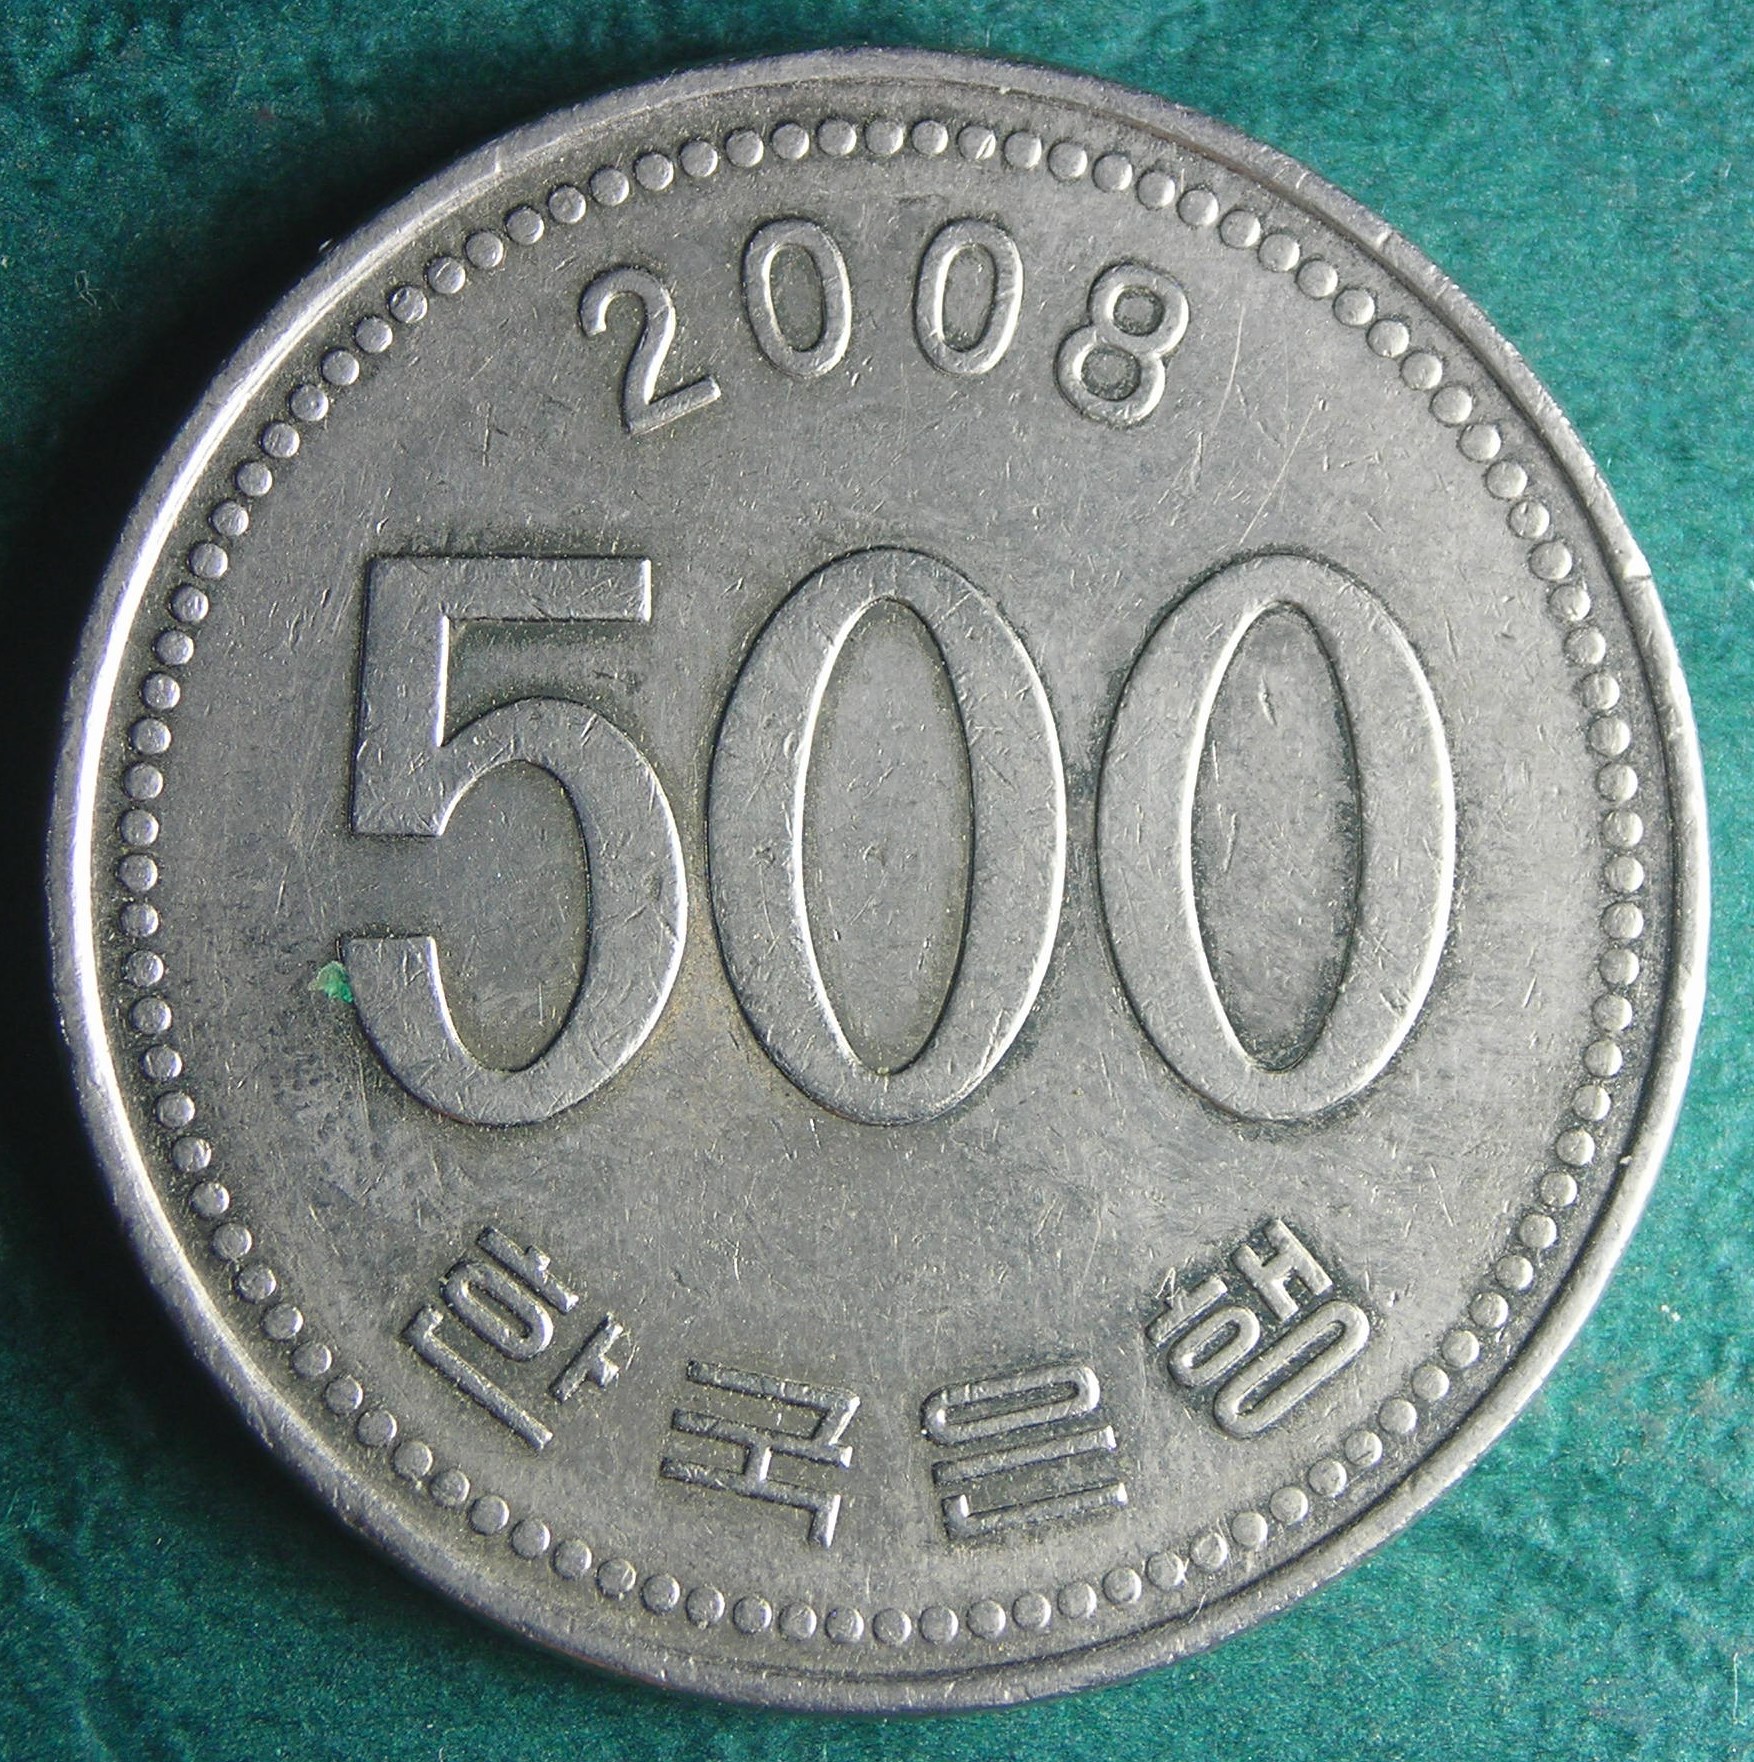 2008 KR 500 w rev.JPG